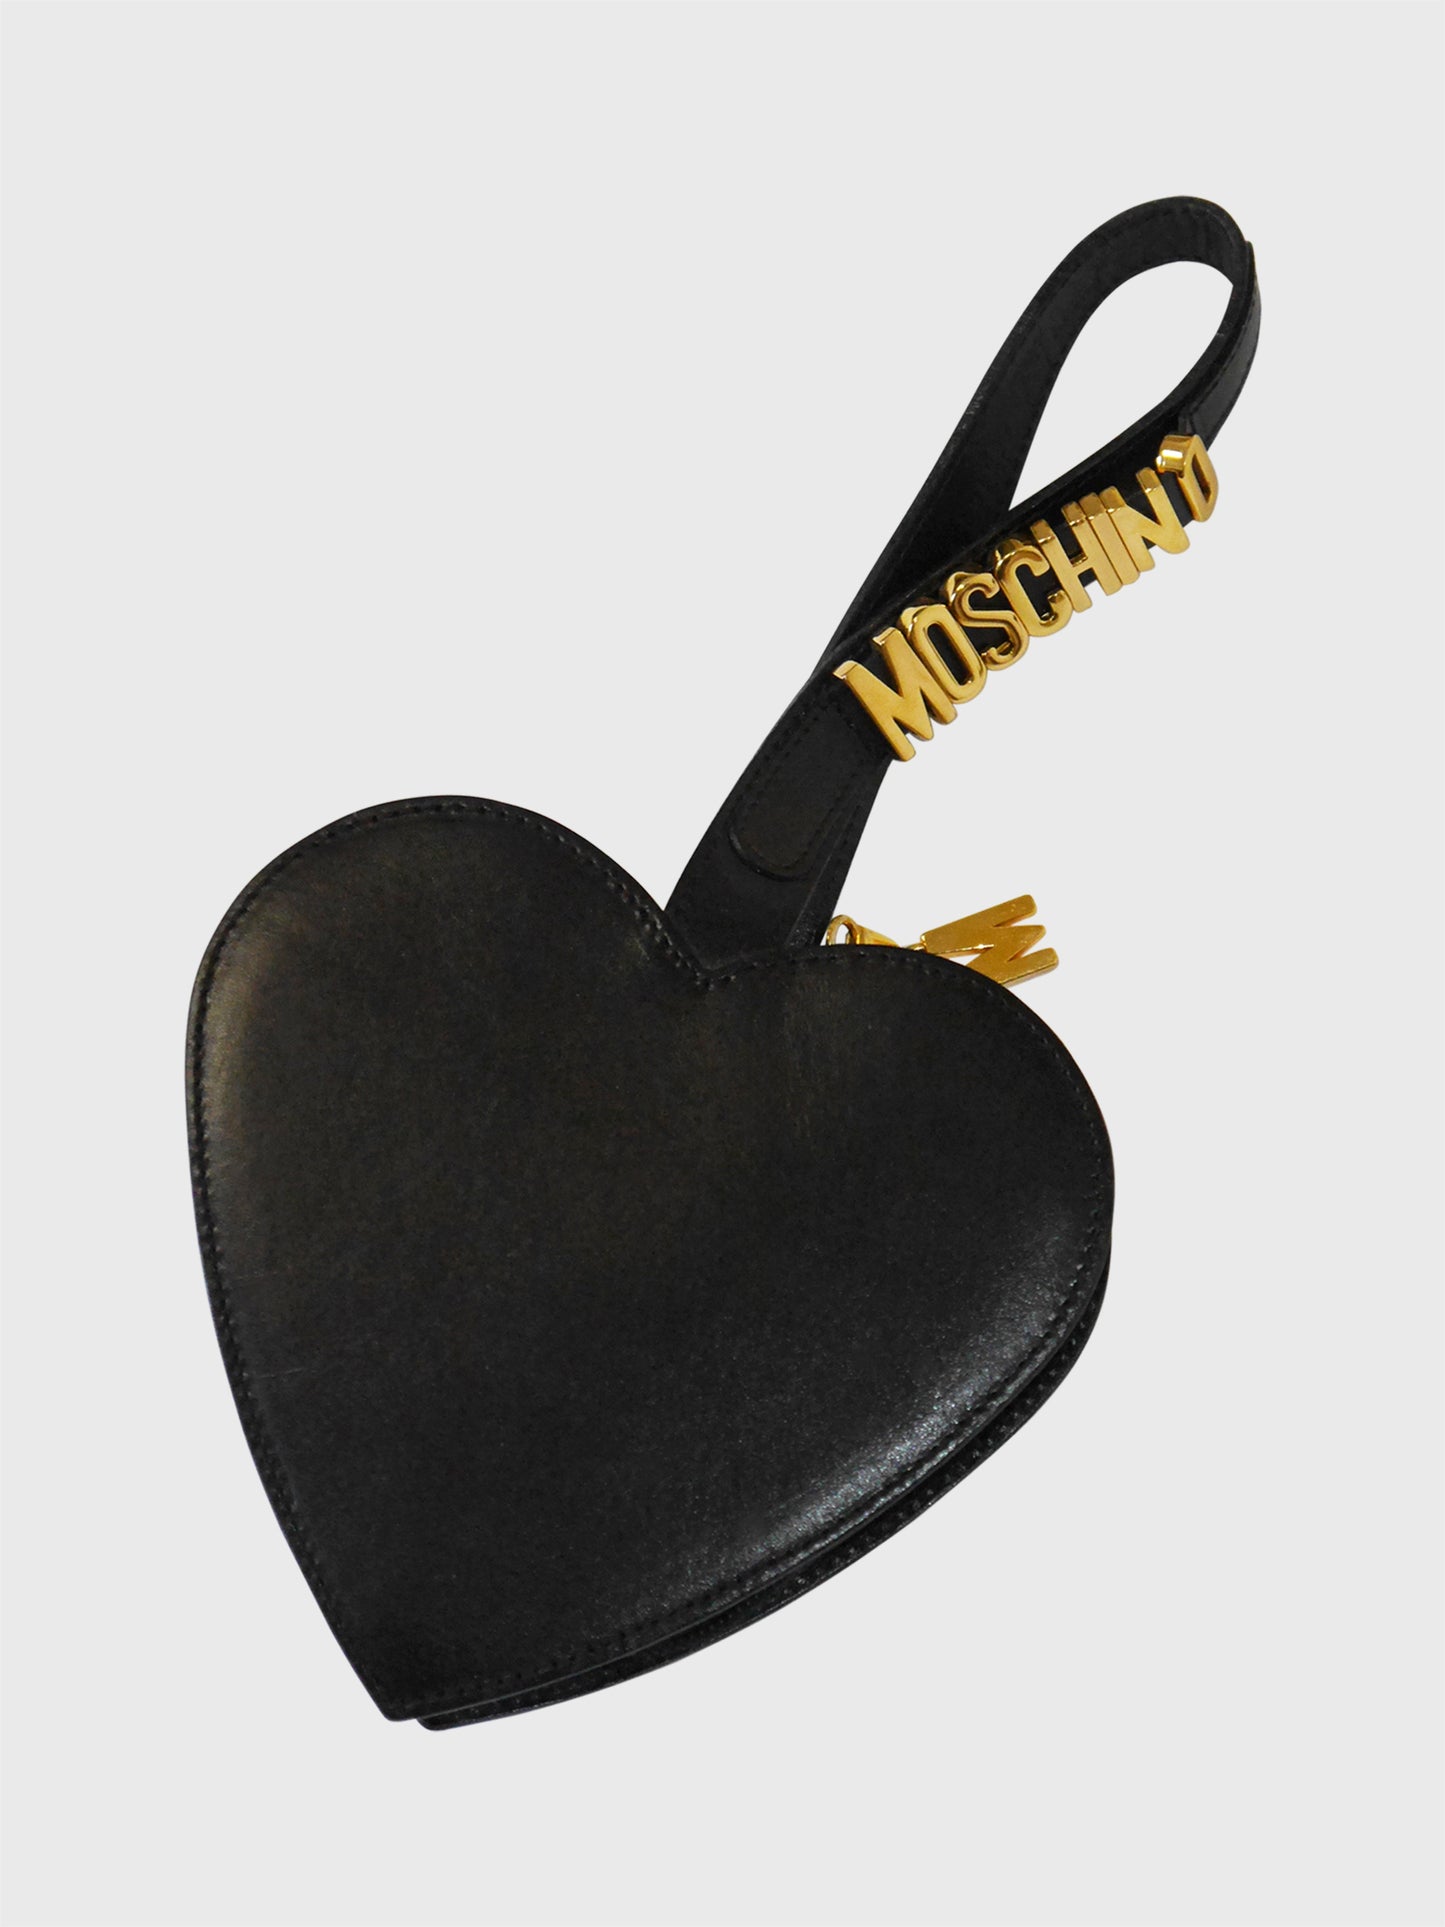 MOSCHINO by Redwall 1990s Vintage Dark Brown Heart Wristlet Evening Bag